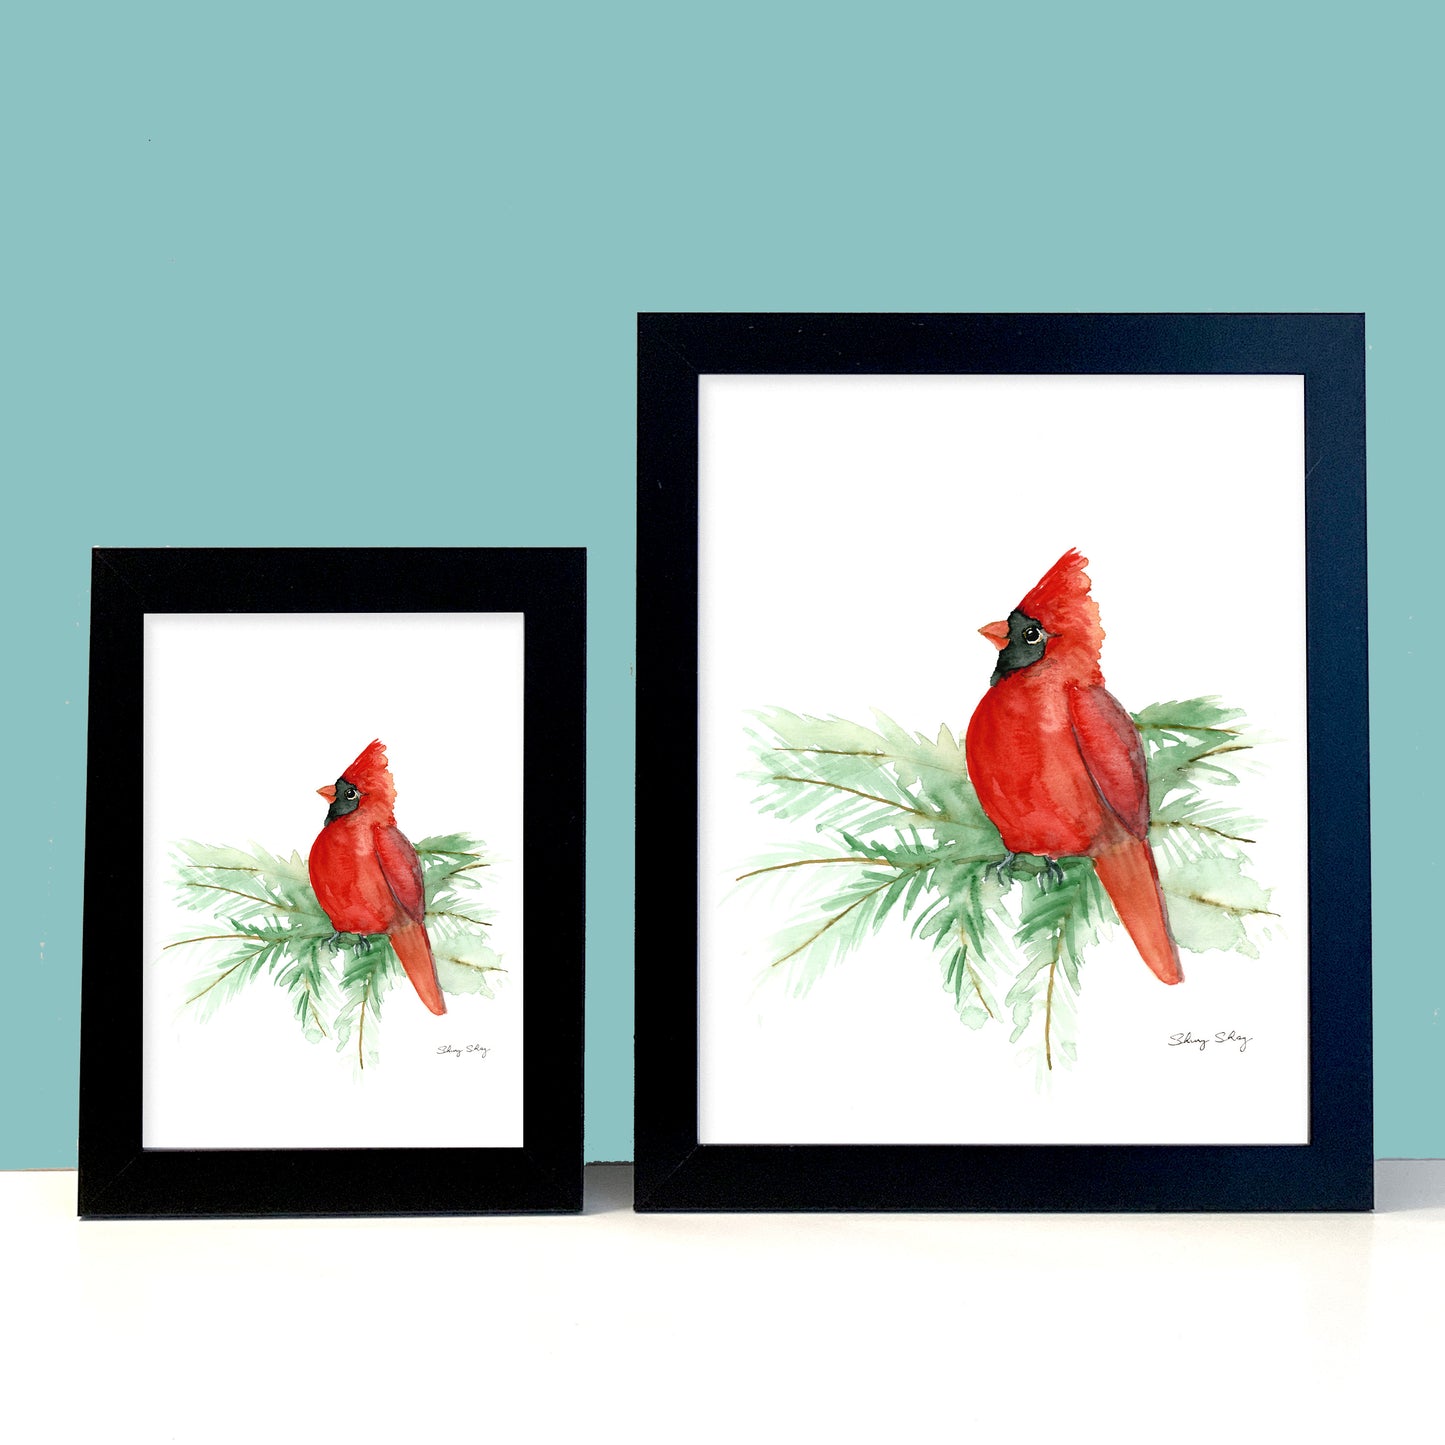 Red Cardinal Original Painting Wall Art Print - Flamingo Shores - Original Art for Home Decor and Gifts